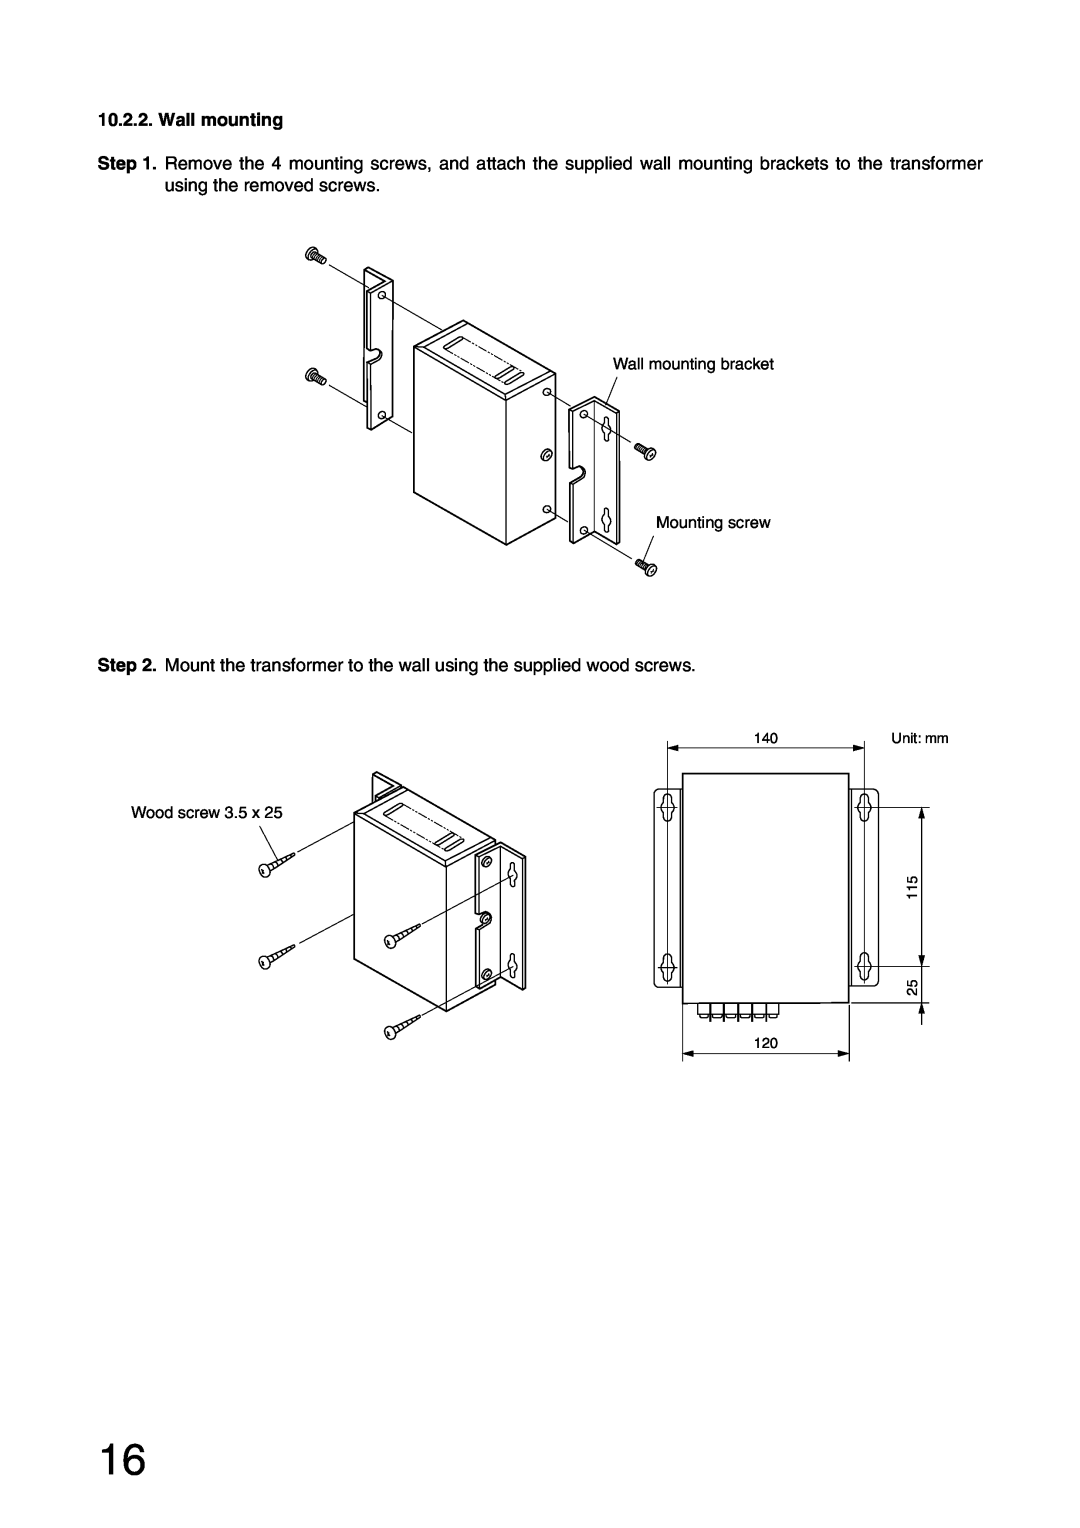 Aiphone AI-900 installation manual Wall mounting bracket Mounting screw, Wood screw 